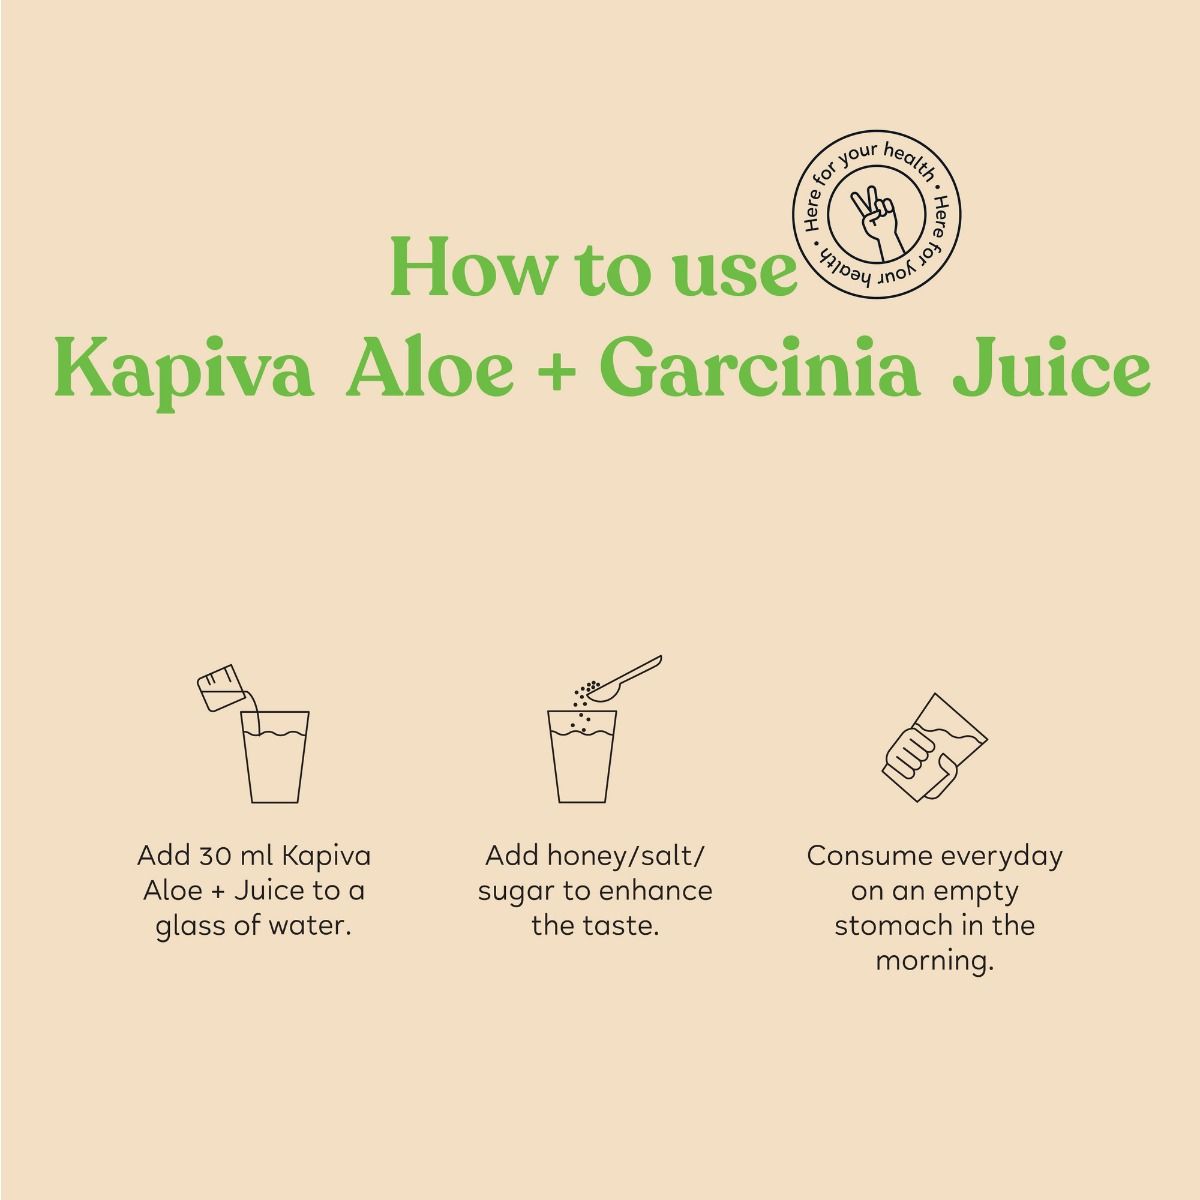 Kapiva Aloe + Garcinia Juice, 1 L, Pack of 1 